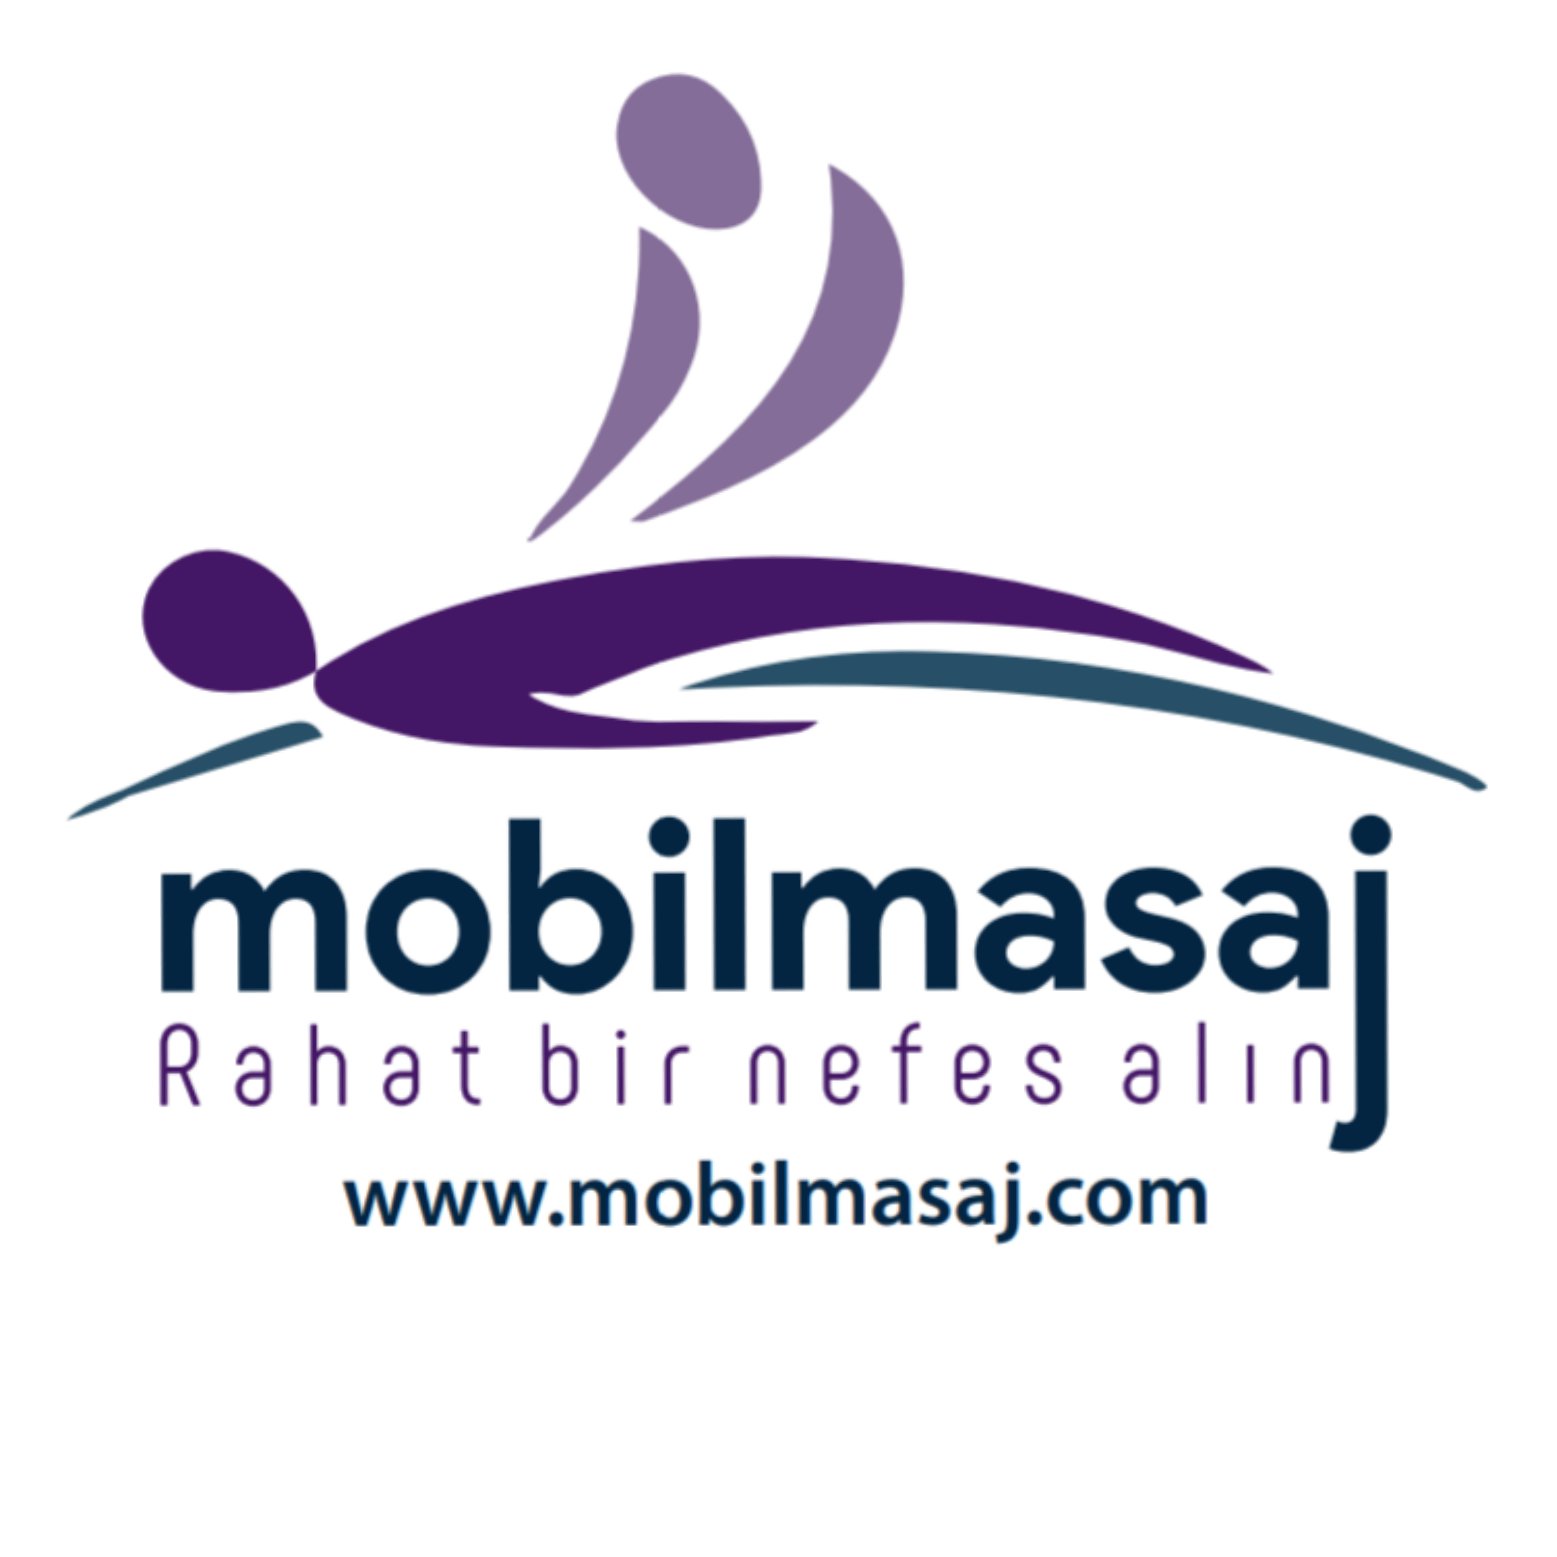 Mobil Masaj